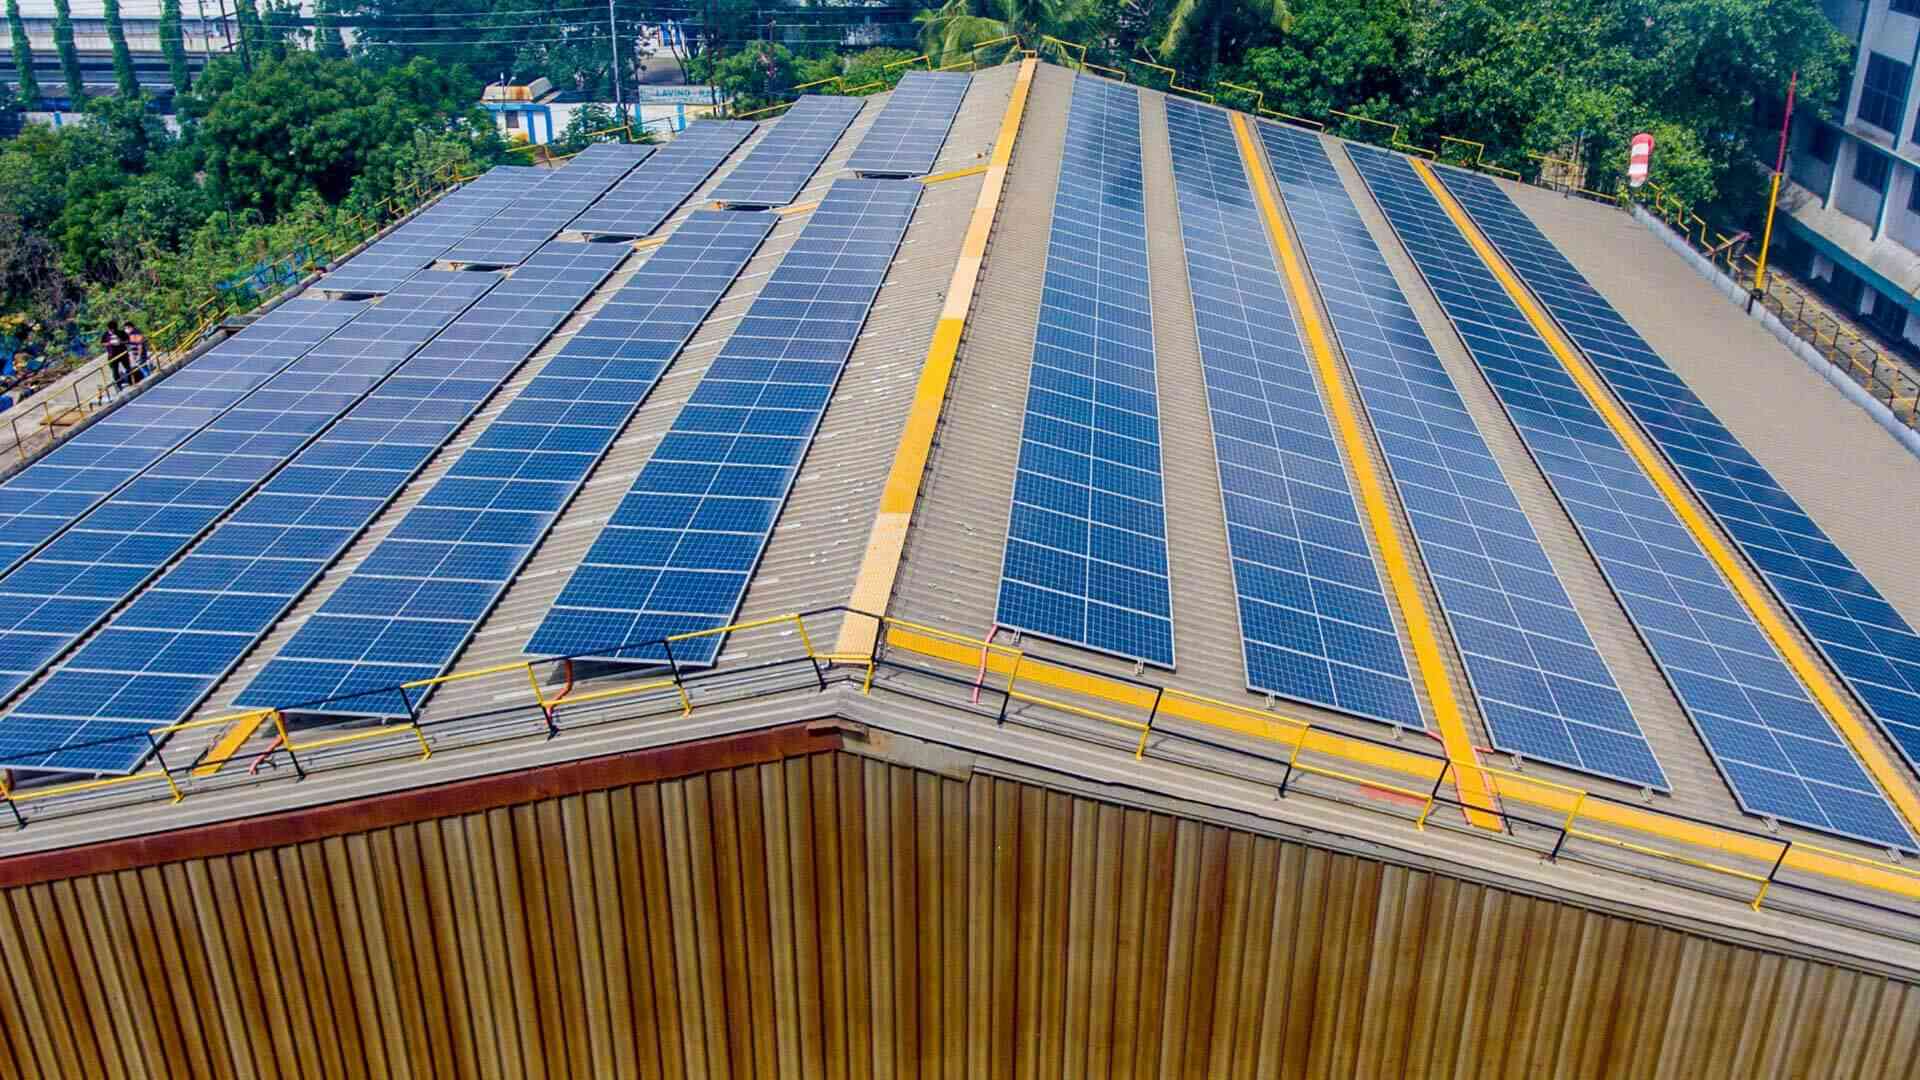 Solar Panel Manufacturer TM